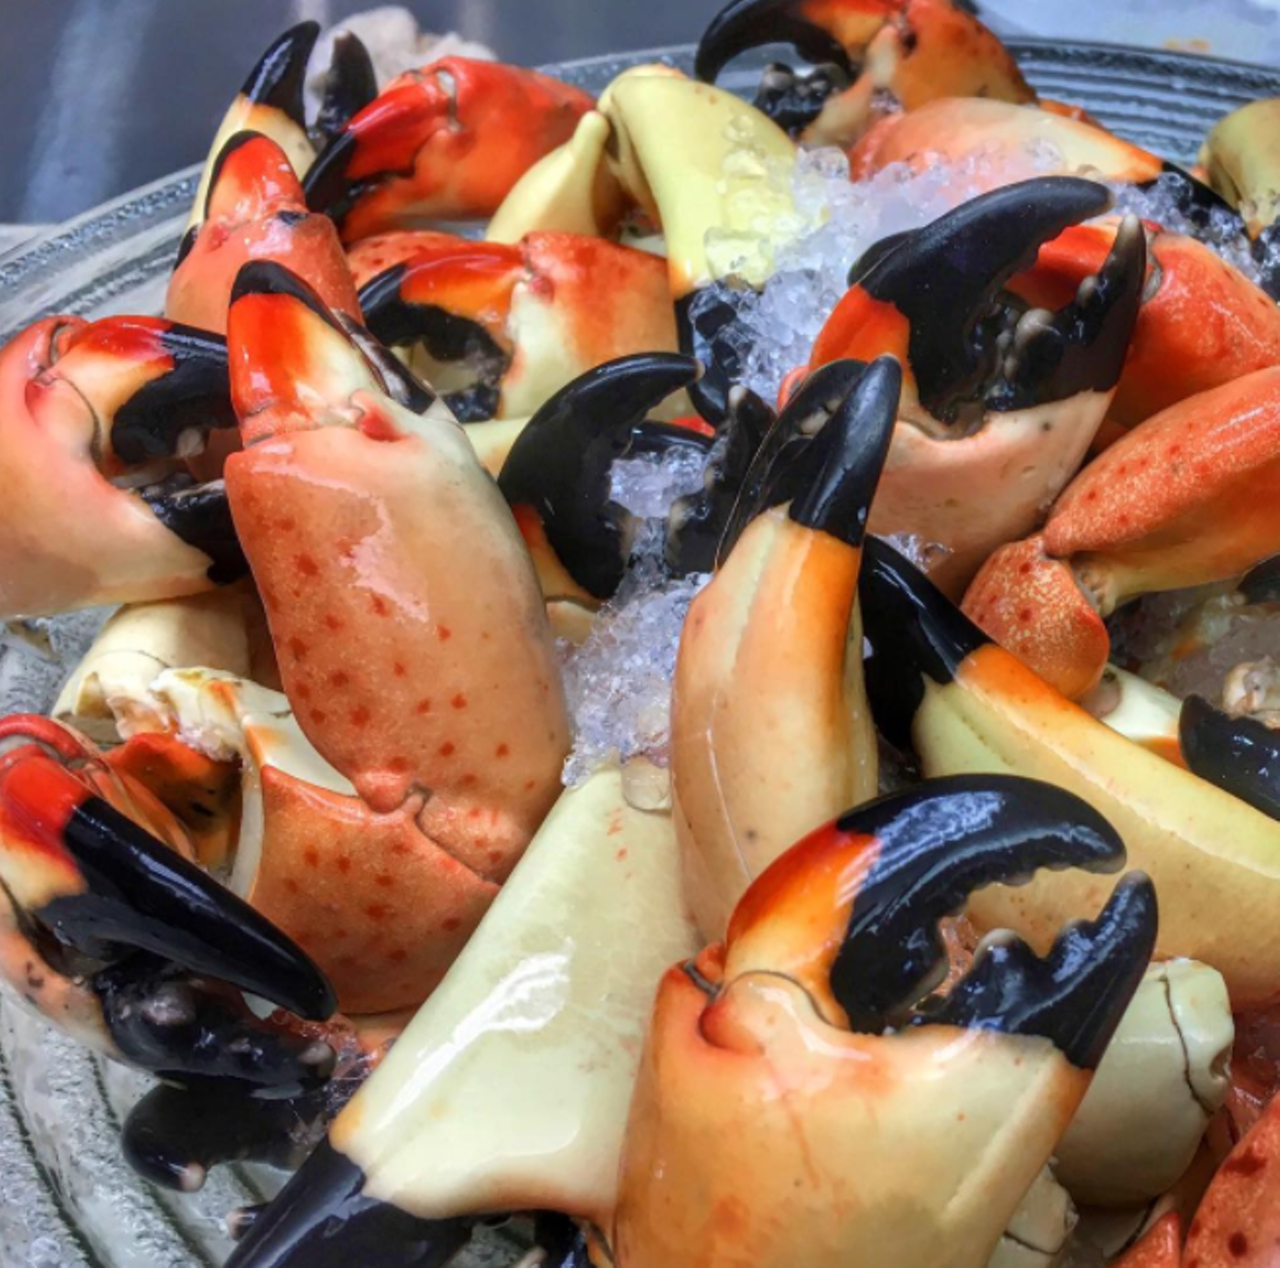 It&#146;s stone crab season, baby
Photo via flemingssteakhouse/Instagram